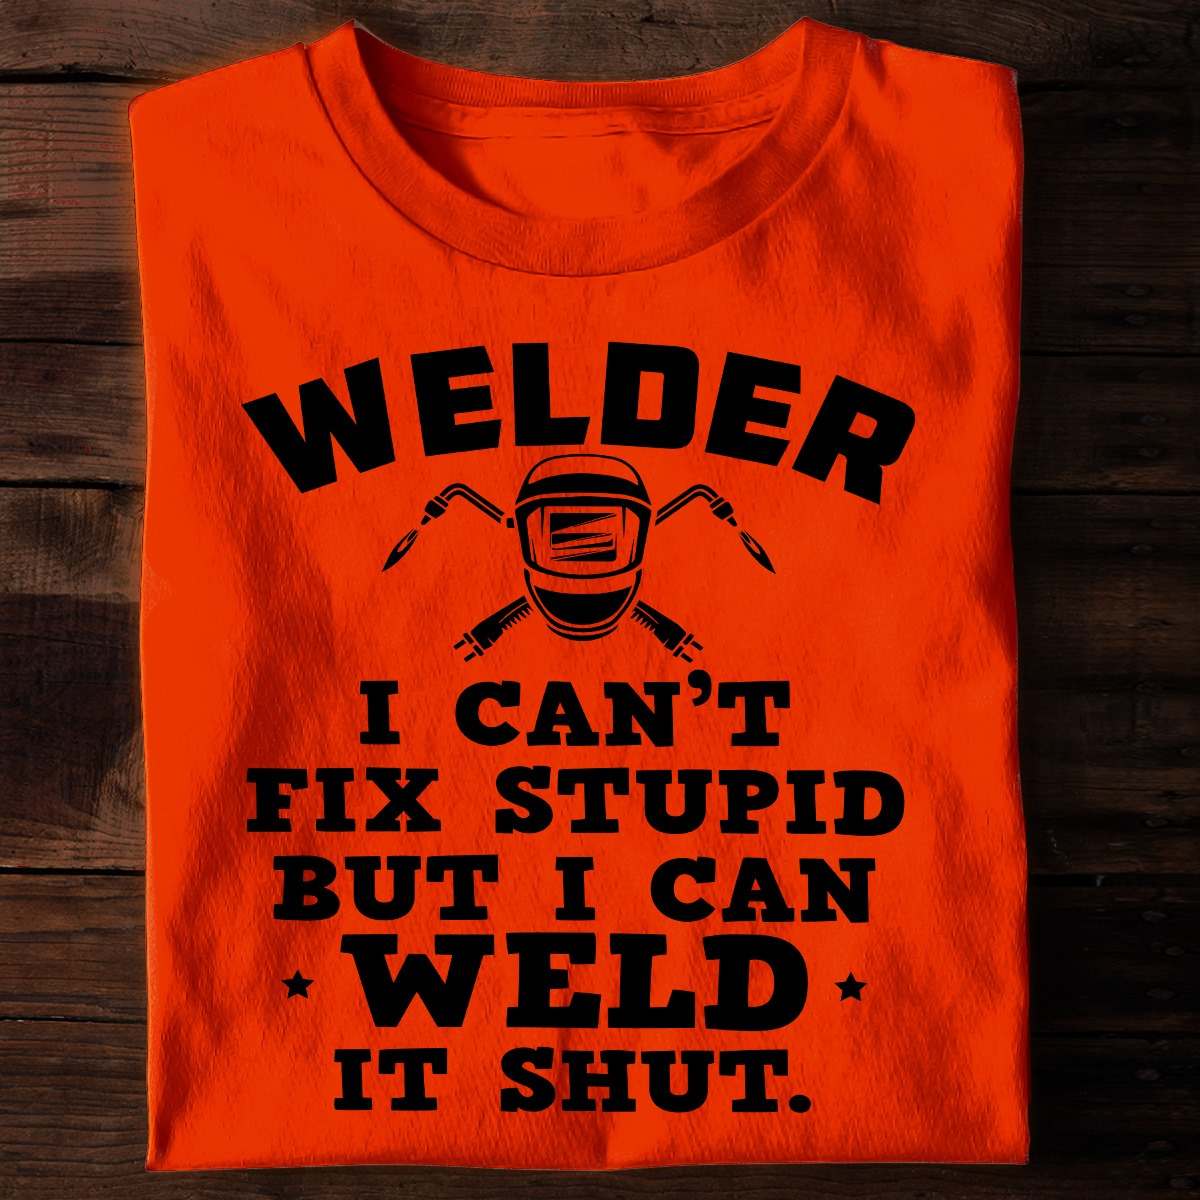 Welder I can't fix stupid but I can weld it shut - Welder the job